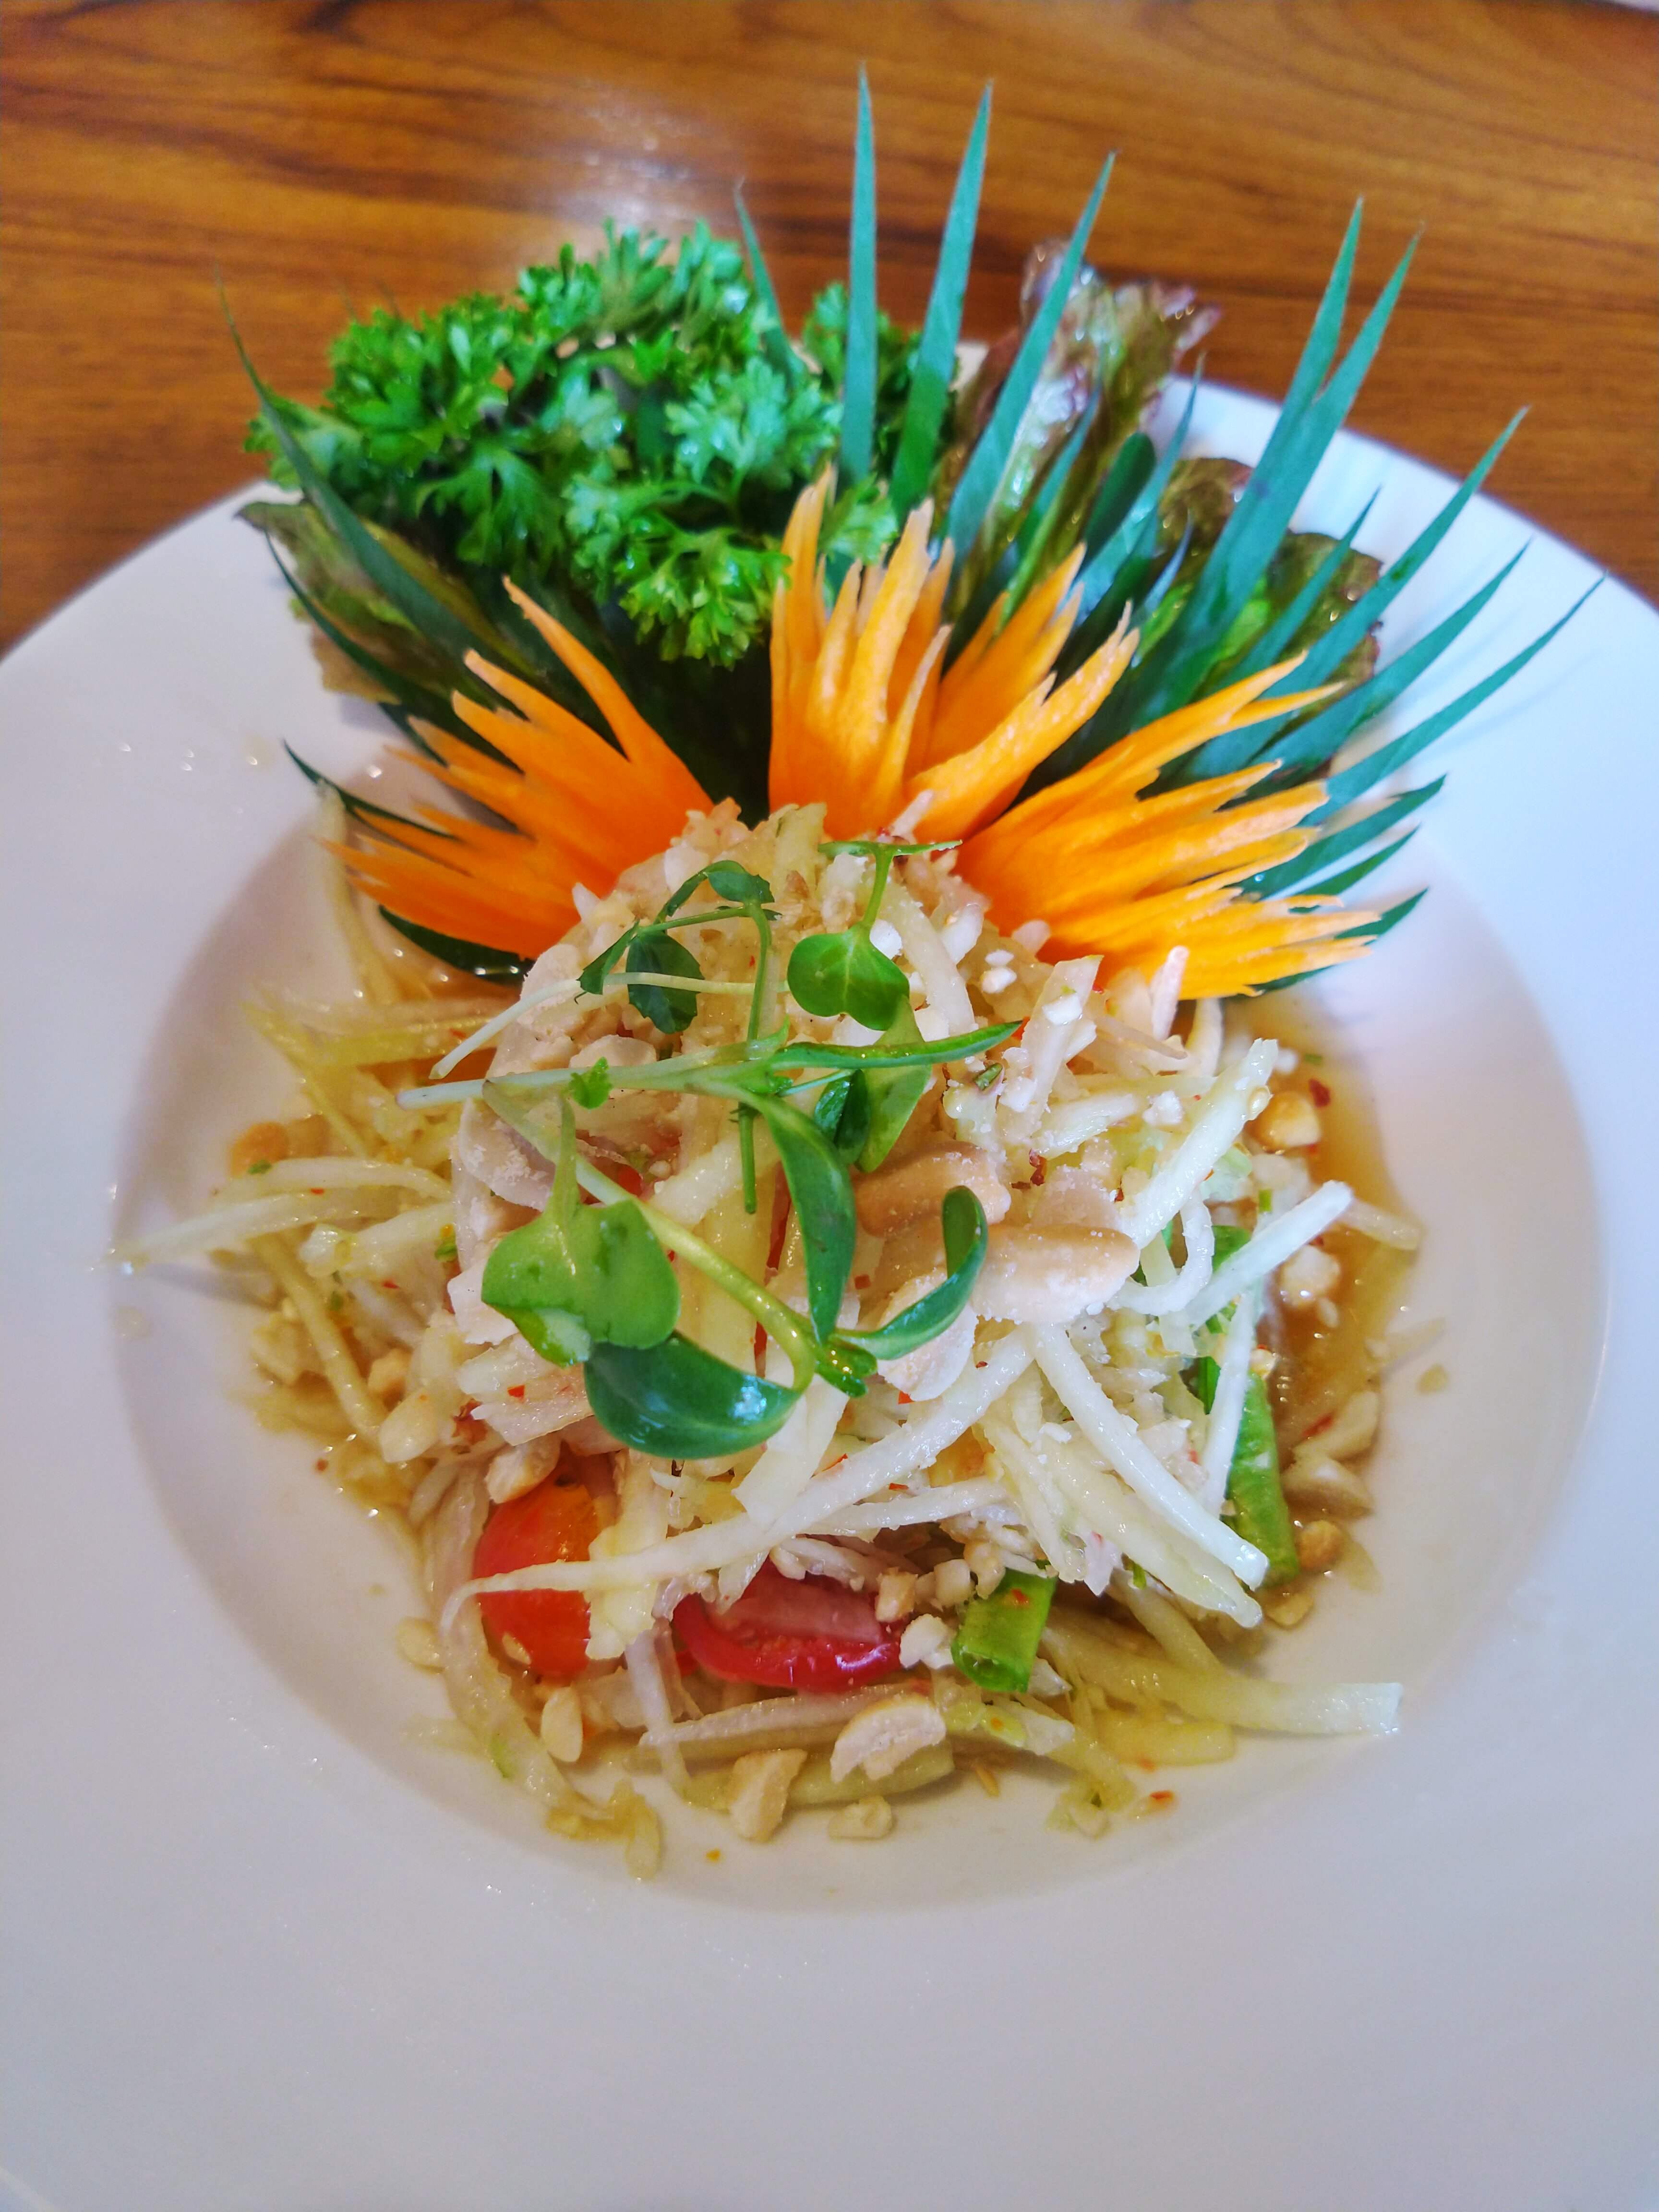 Cuisine,Dish,Food,Ingredient,Pad thai,Green papaya salad,Nộm,Thai food,Recipe,Produce